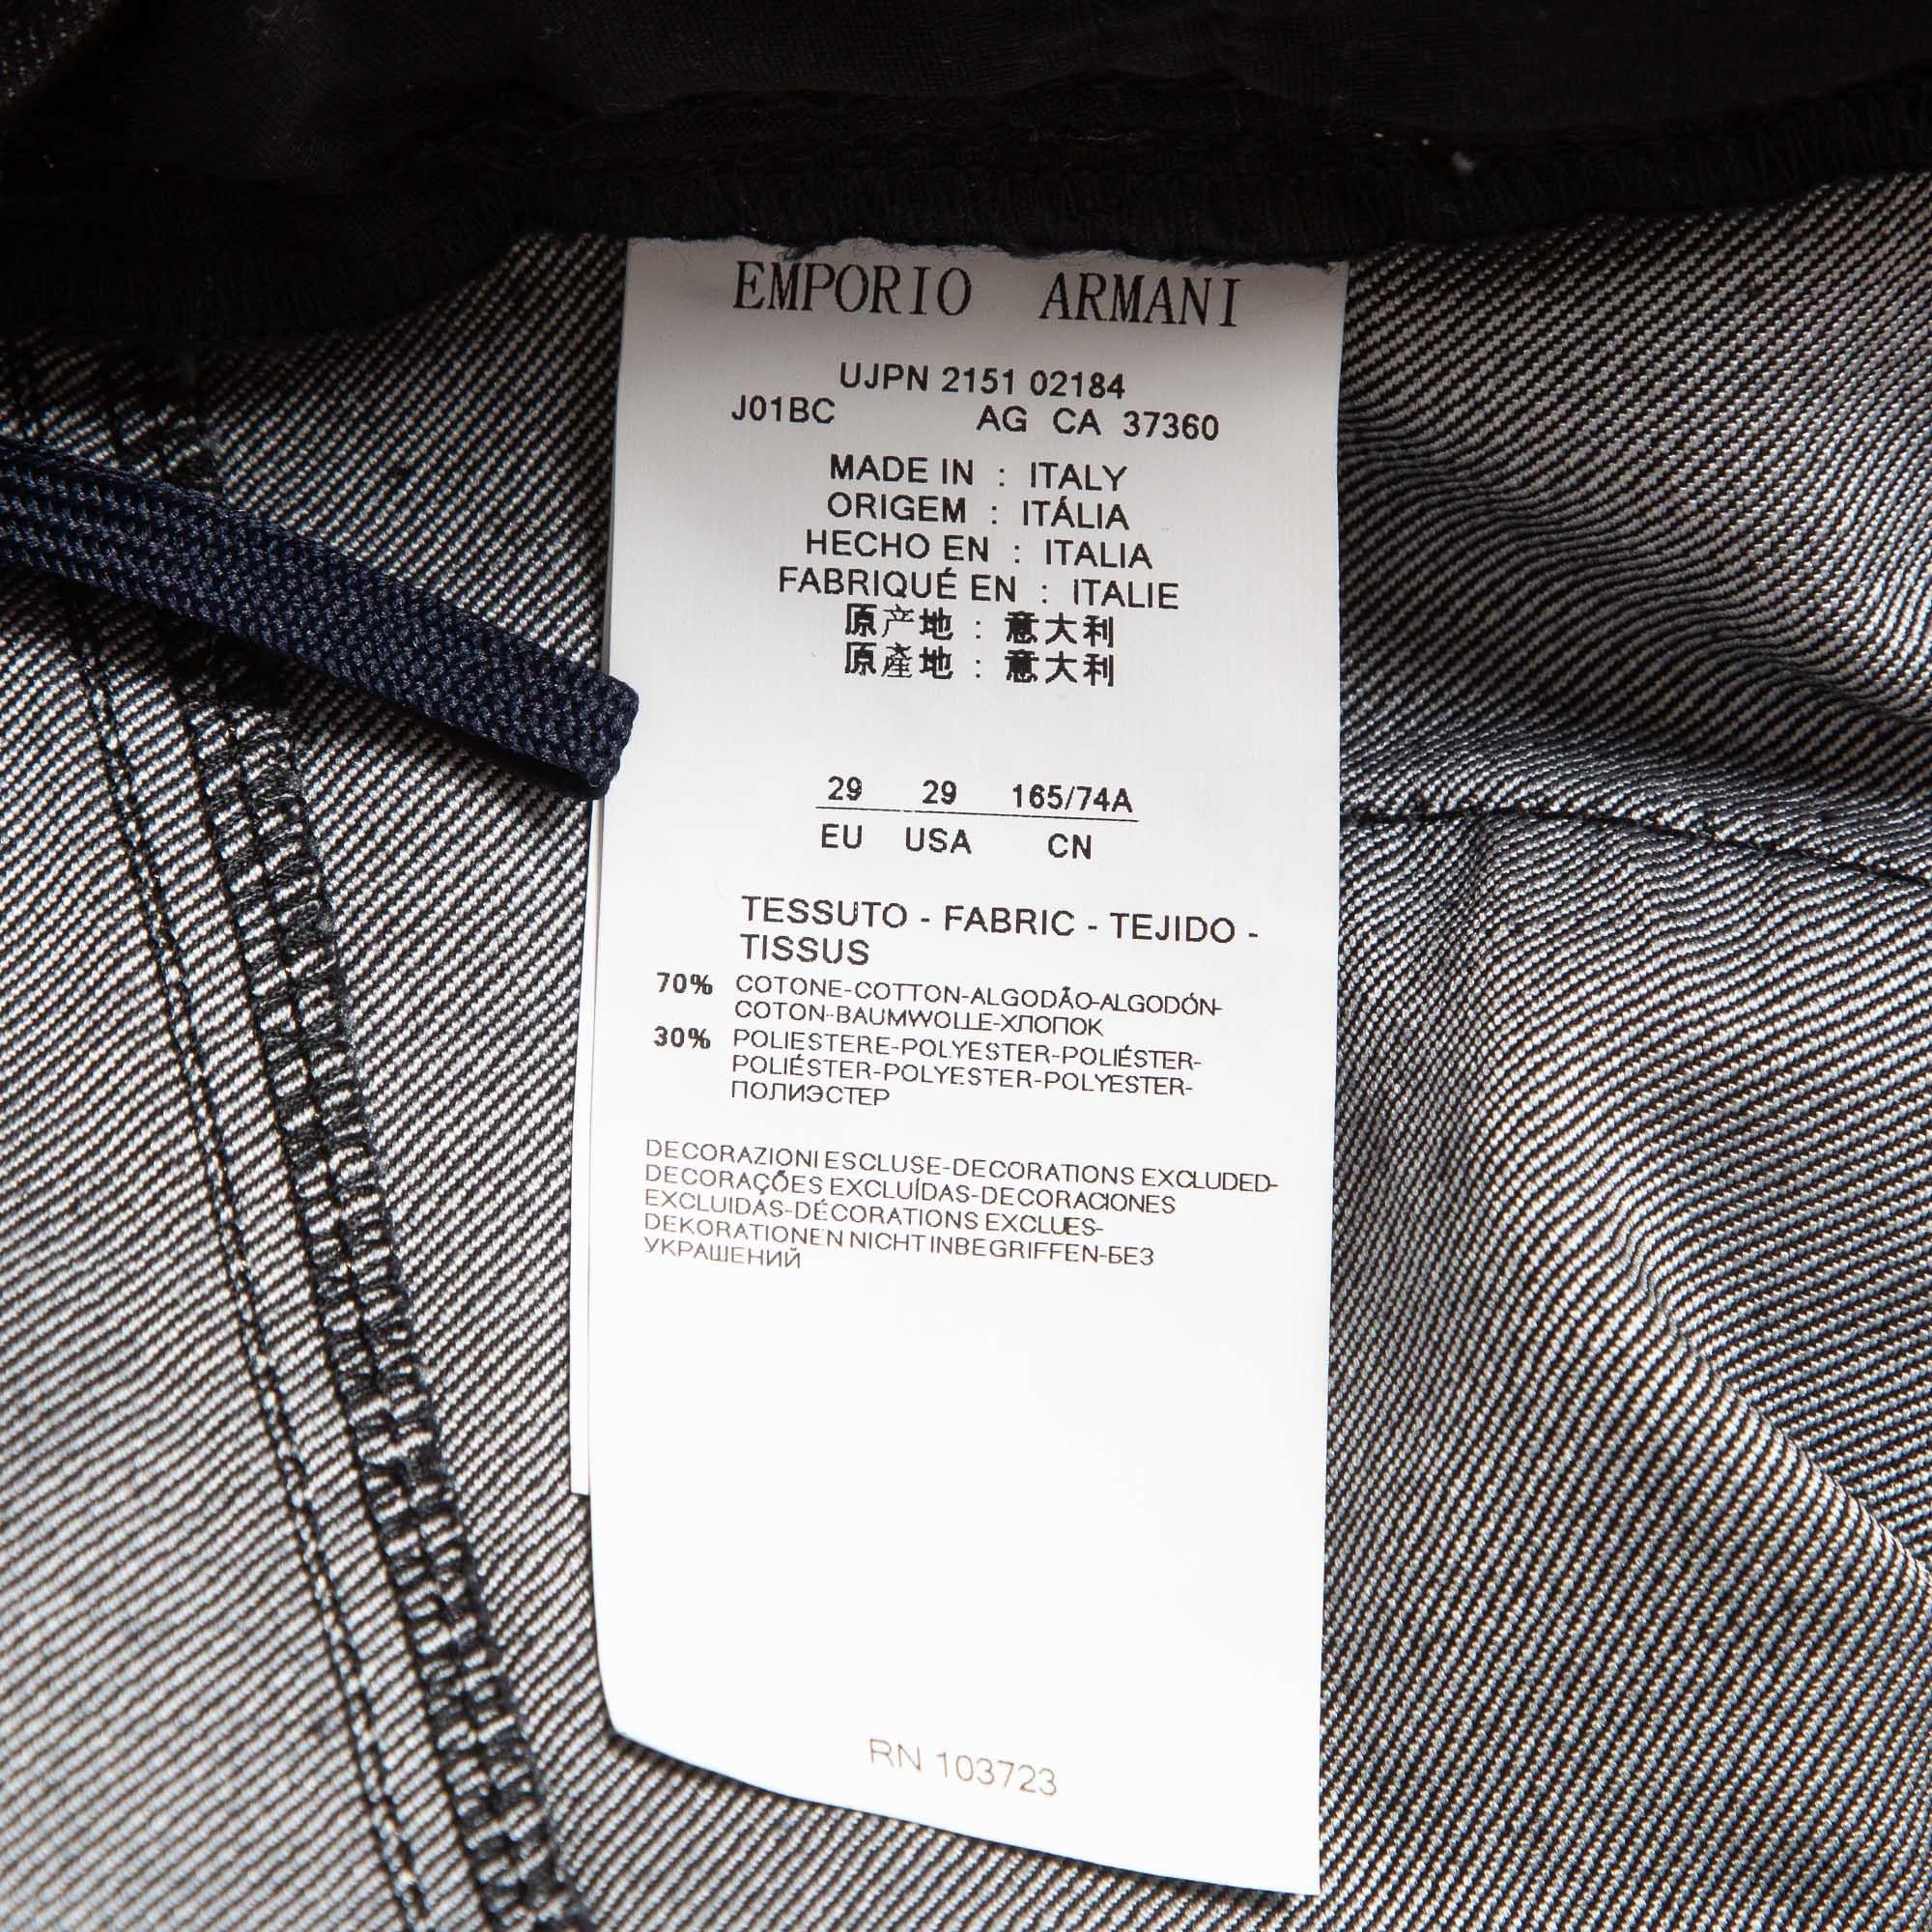 Emporio Armani Black Denim Sequined Pocket Detail Dakota Jeans M Waist 29